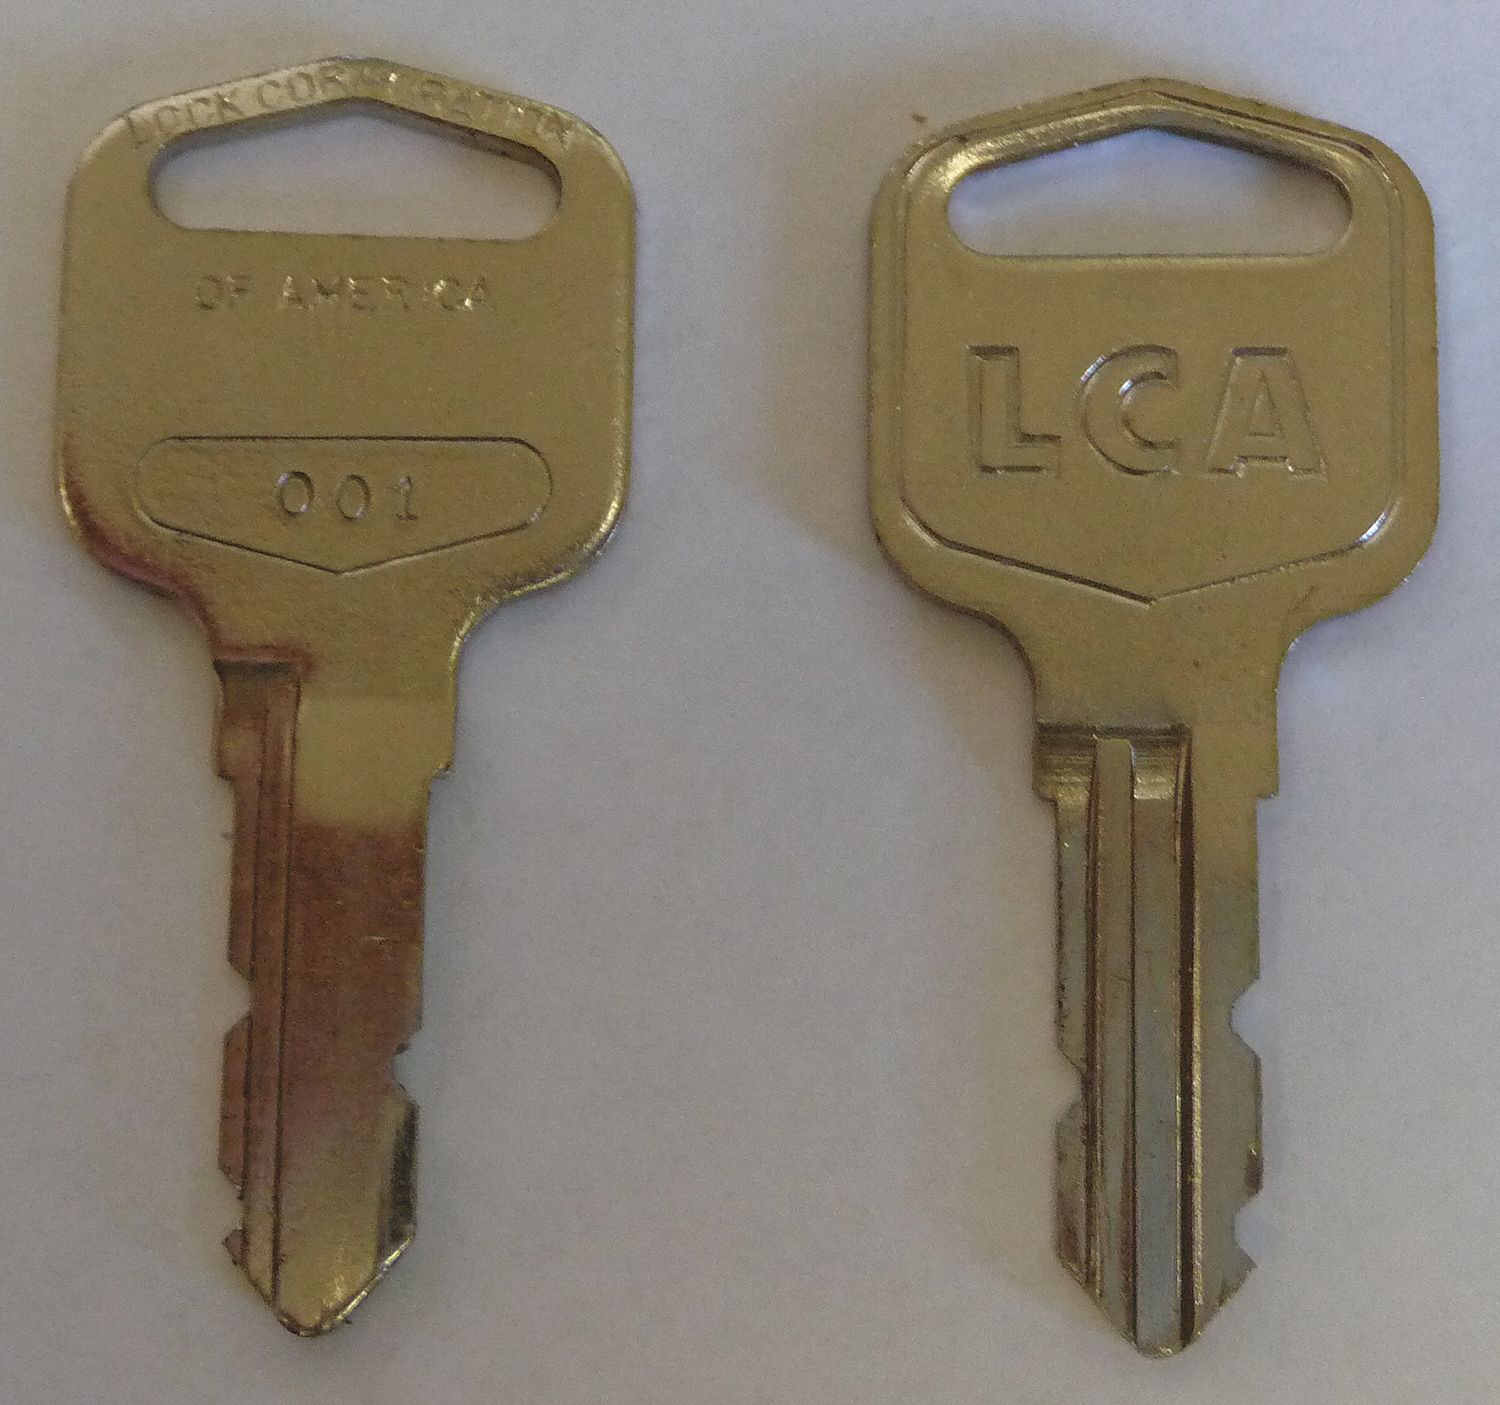 Built-In Keyed Locker Lock Control Key: M001 Control Key, LOCK CORP OF AMERICA, For M001, 1 Keys